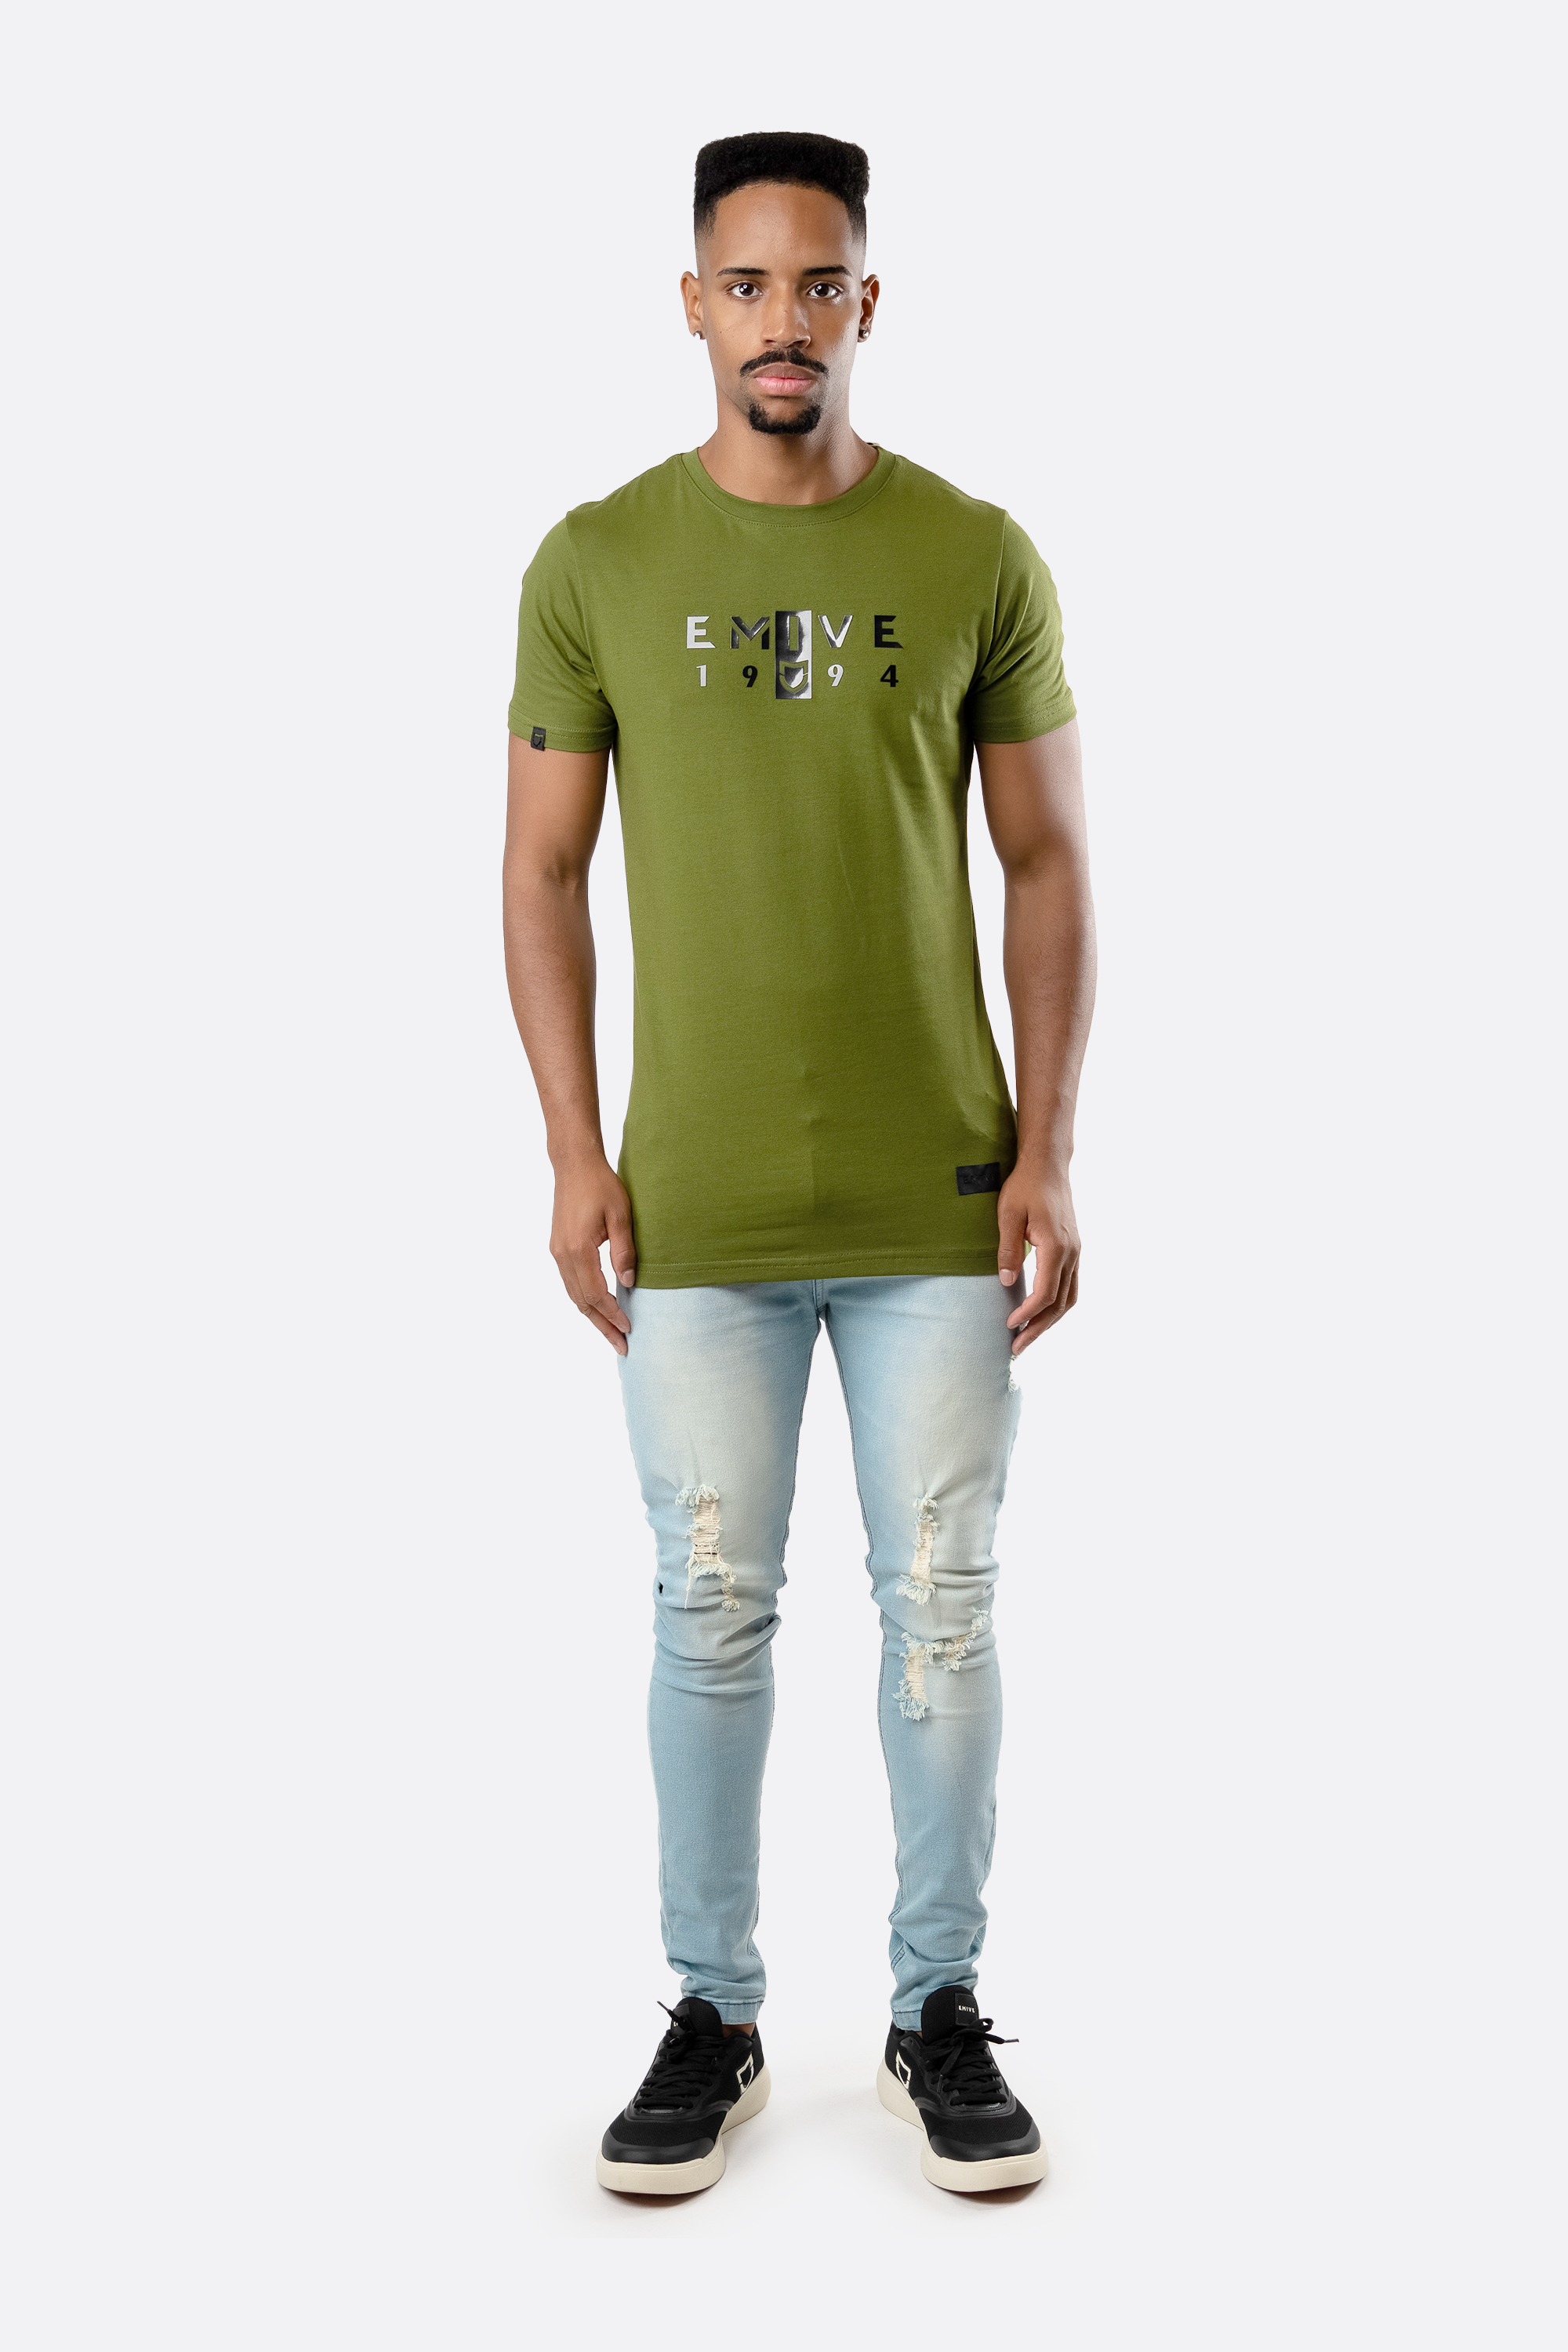 Camiseta Emive Long Retro Verde